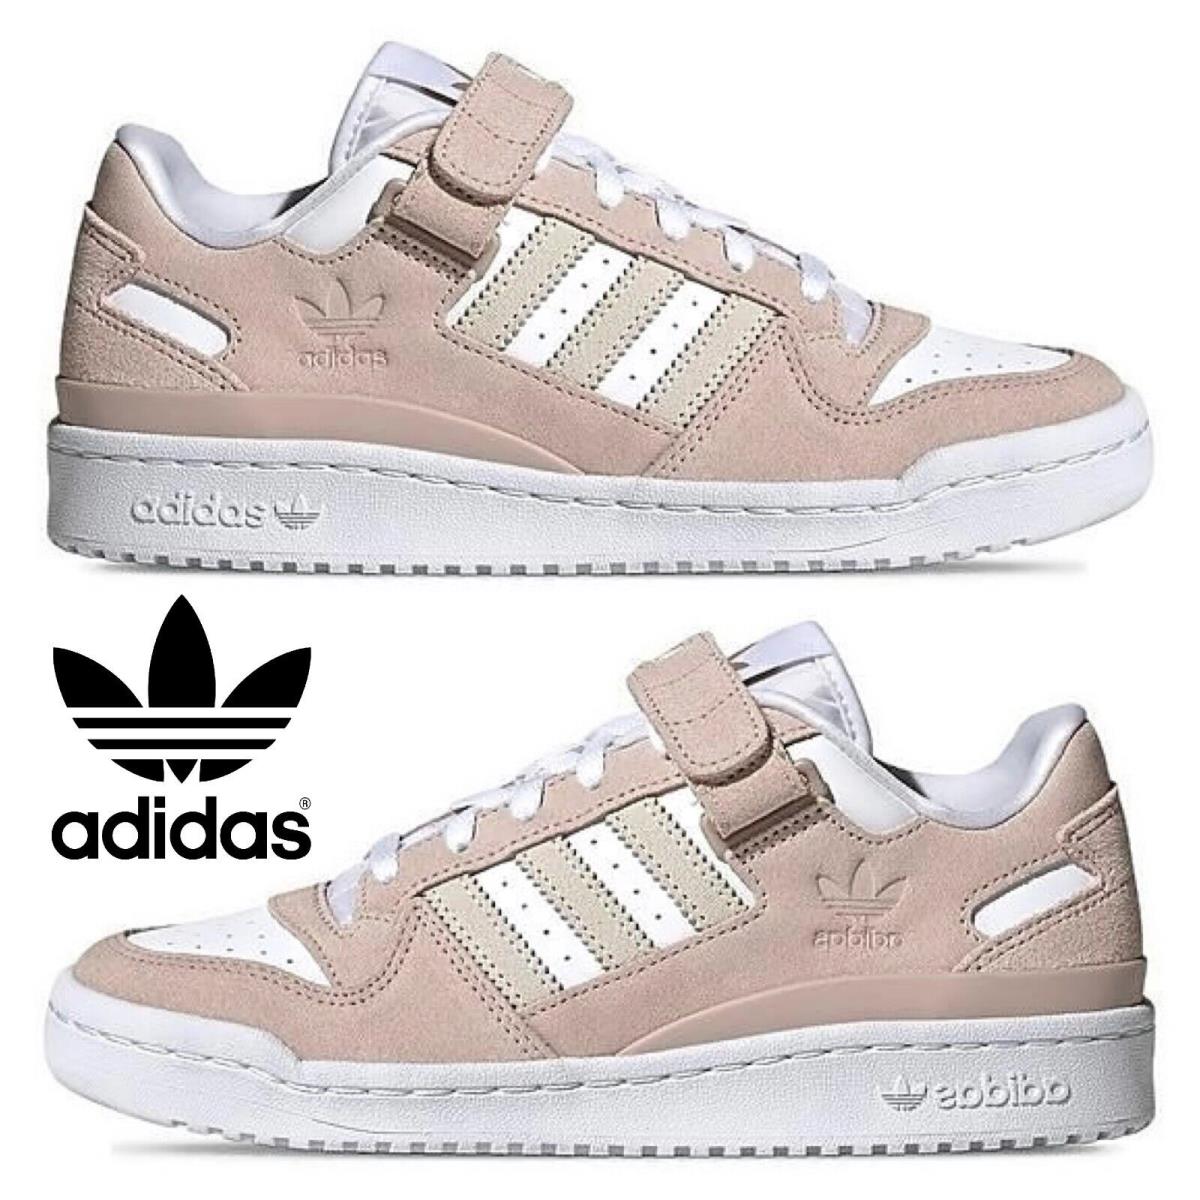 Adidas Originals Forum Low Women`s Sneakers Comfort Casual Shoes Taupe Cream - White , Wonder Taupe/Cream White/White Manufacturer